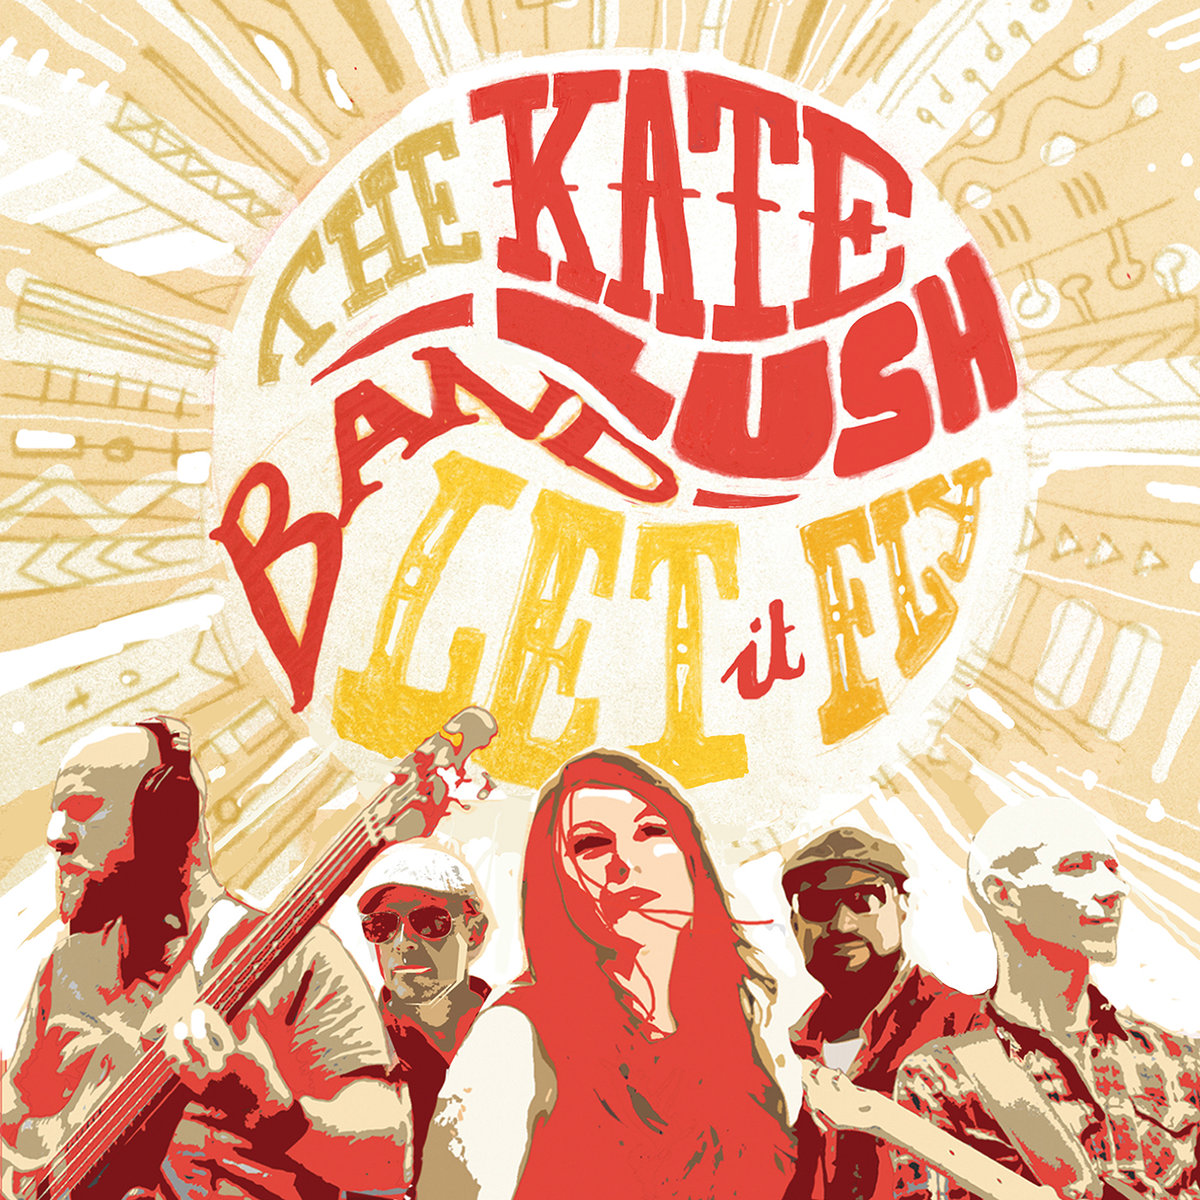 Let it fly. Lush Band. Lush Band discography. Katie lush. The Kate lush Band Wikipedia.